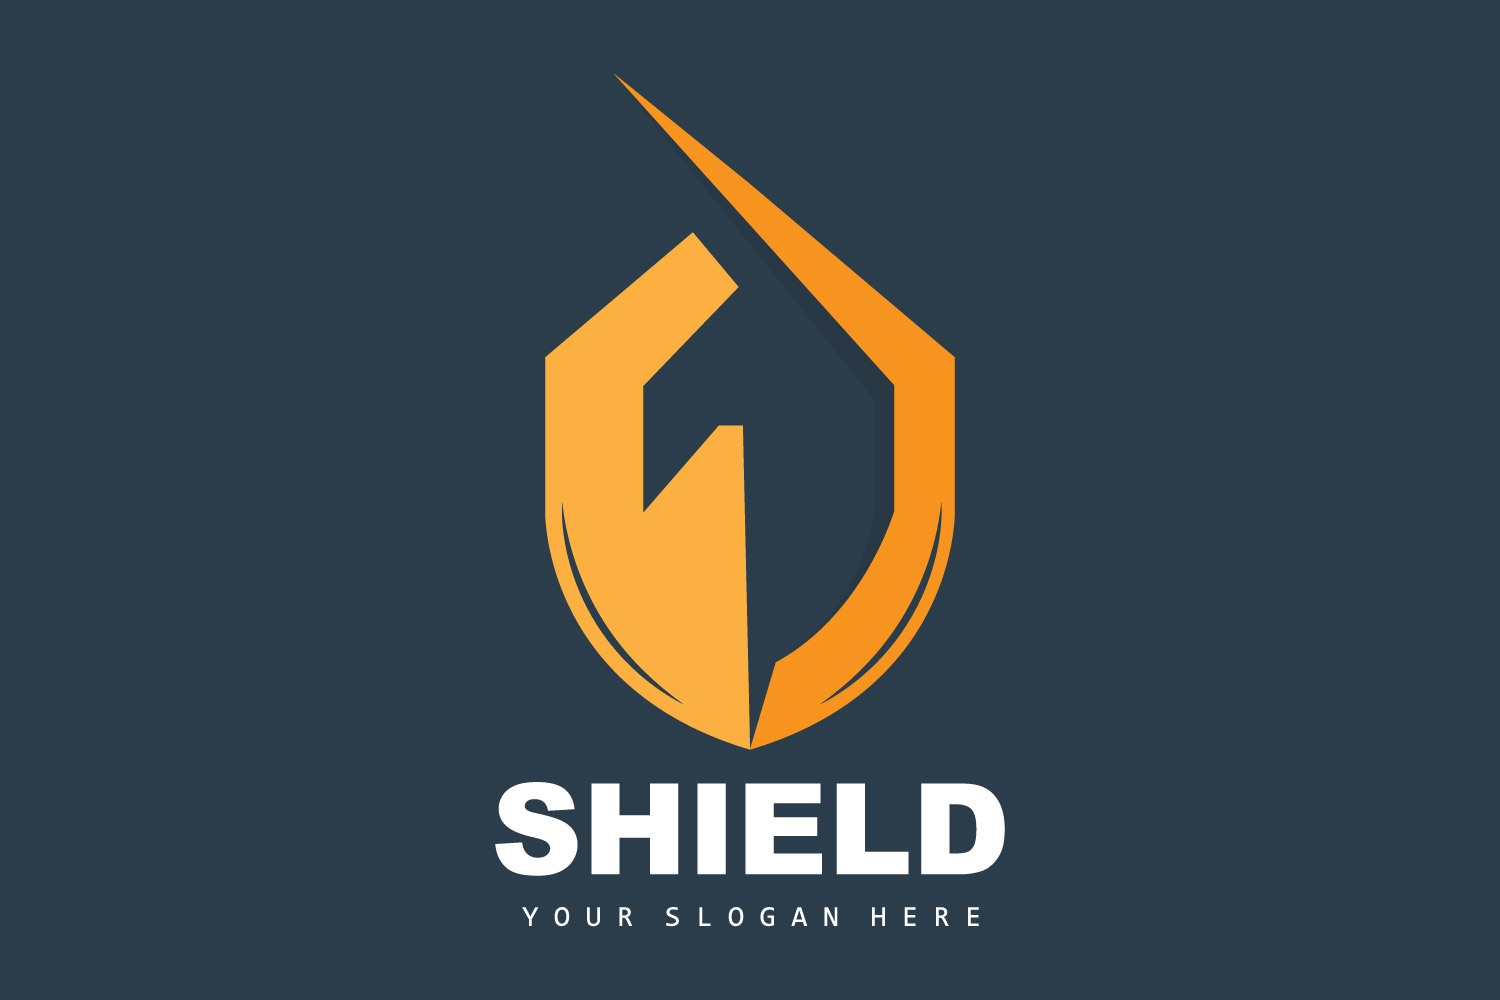 Simple Shield Logo Design Vector TemplateV3